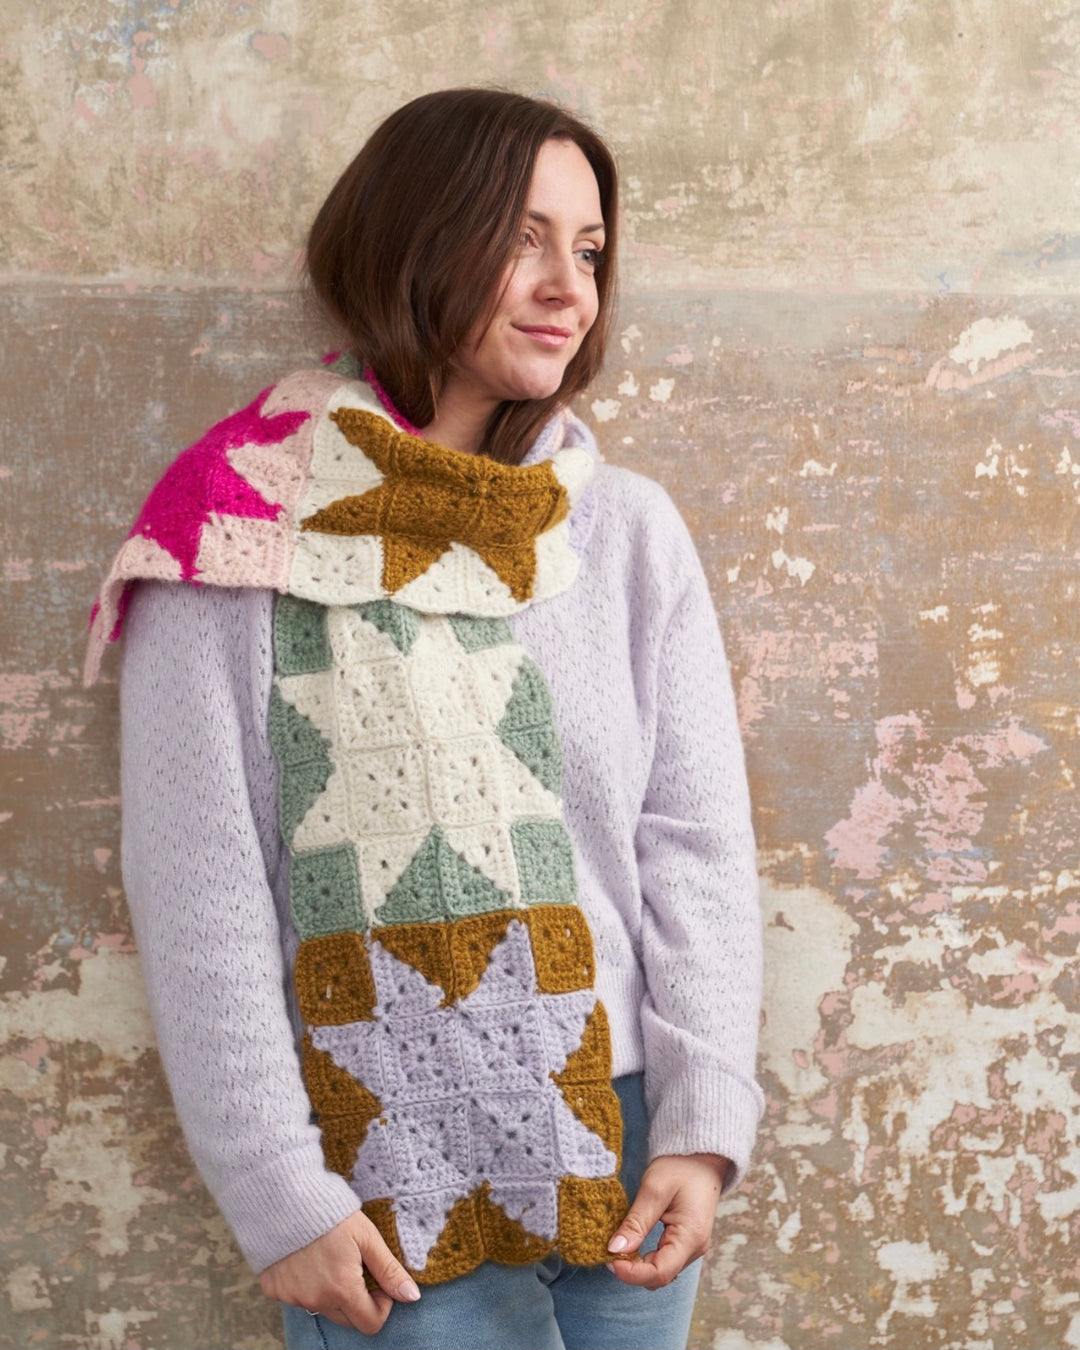 Modern Crochet Style by Lindsey Newns